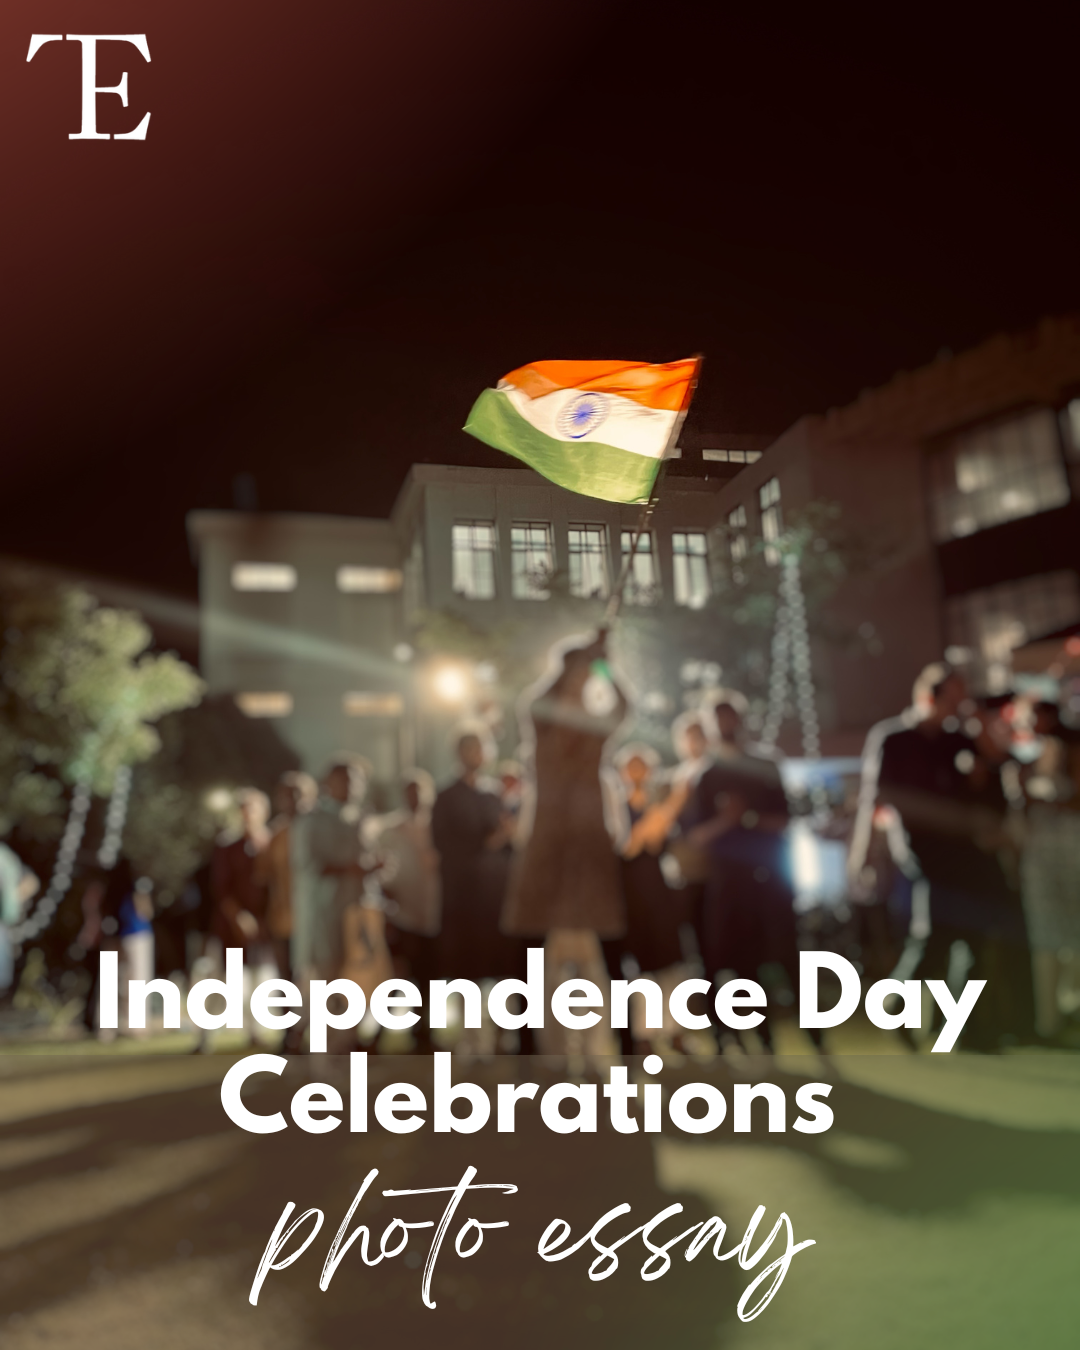 Photo Essay: Independence Day Celebrations